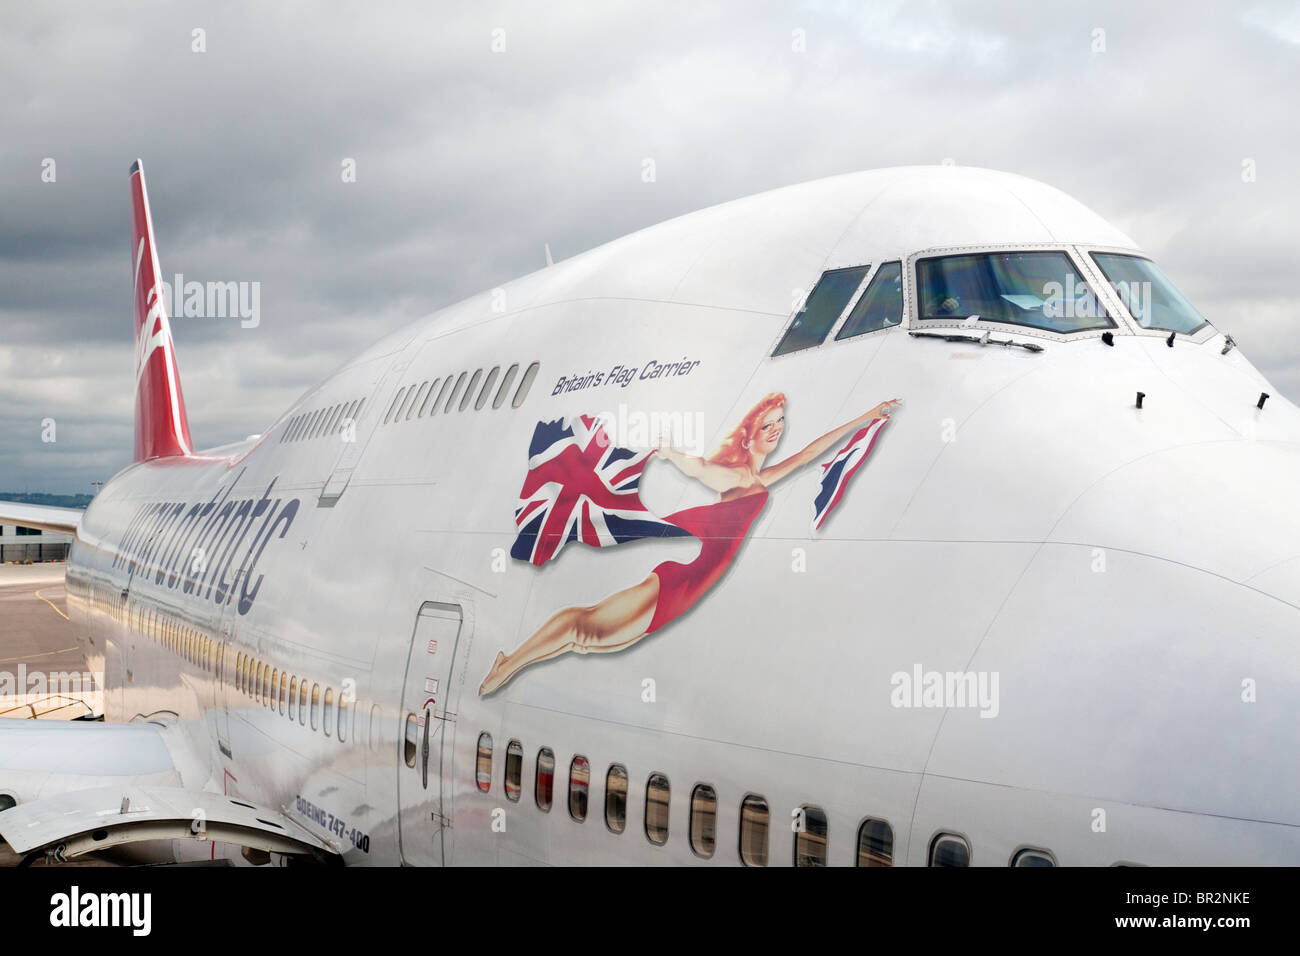 Virgin Atlantic Boeing 747 on the tarmac at South terminal, Gatwick airport, UK Stock Photo